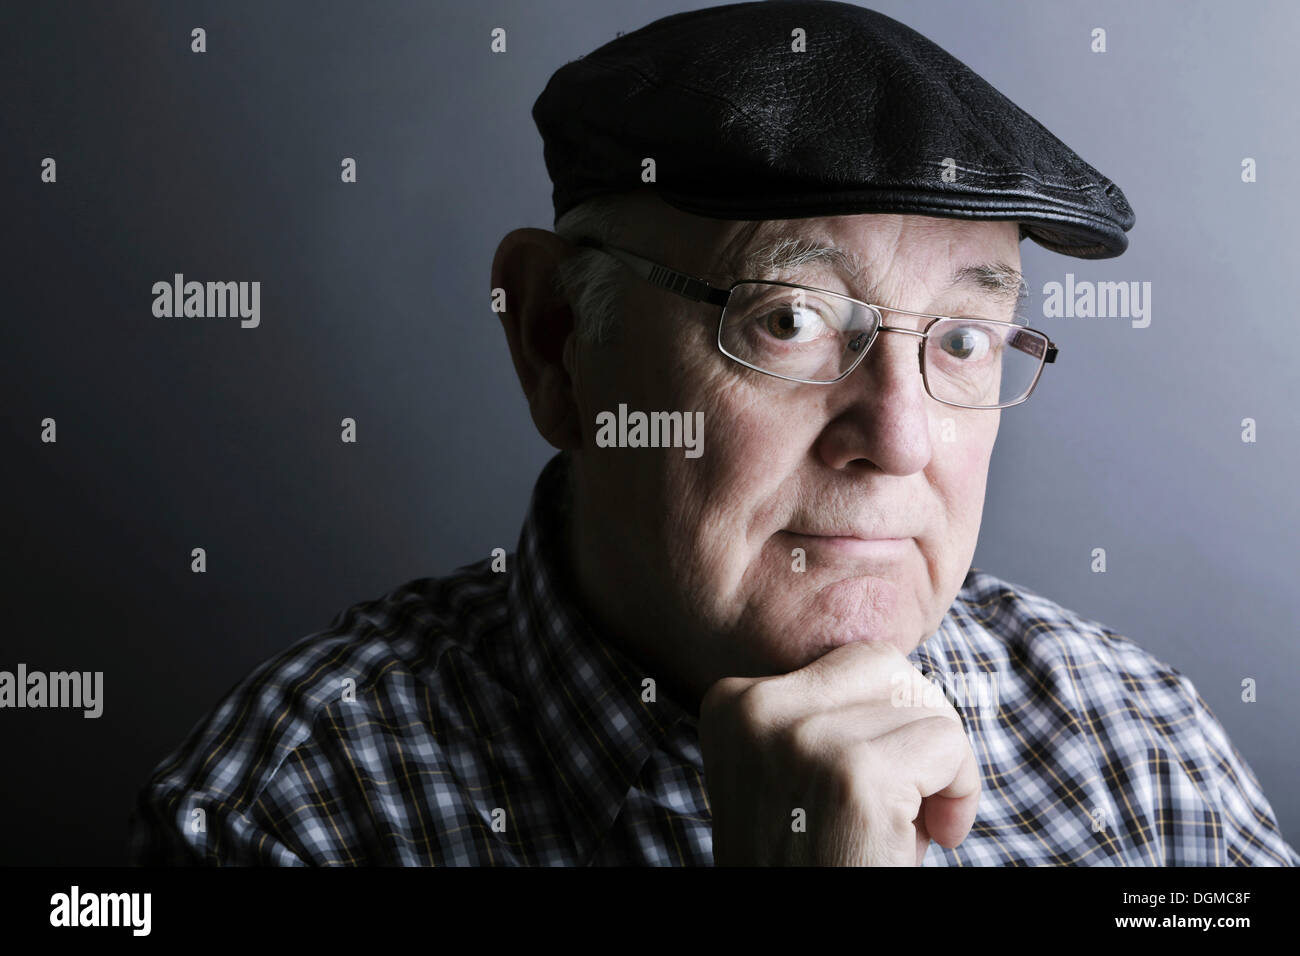 Senior citizen, elderly man, with a cap and glasses, portrait Stock Photo